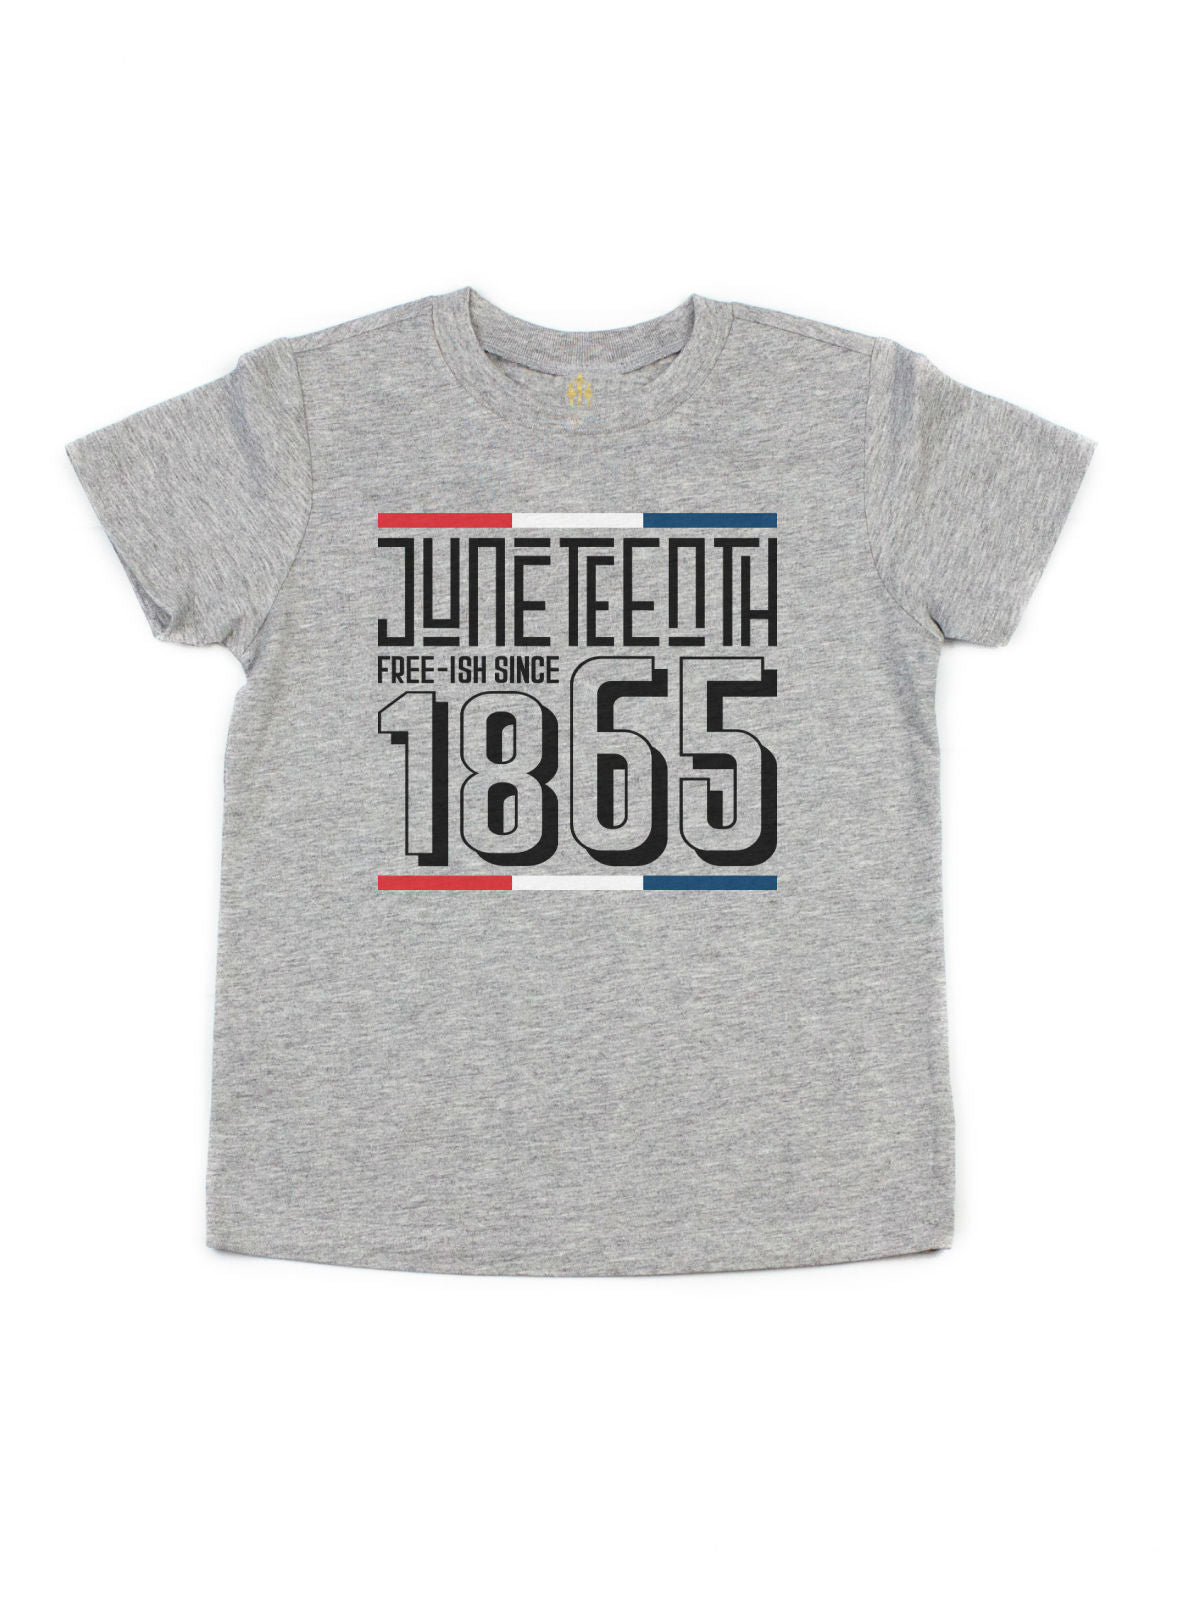 Free-ish Since 1865 Juneteenth Kids Shirt